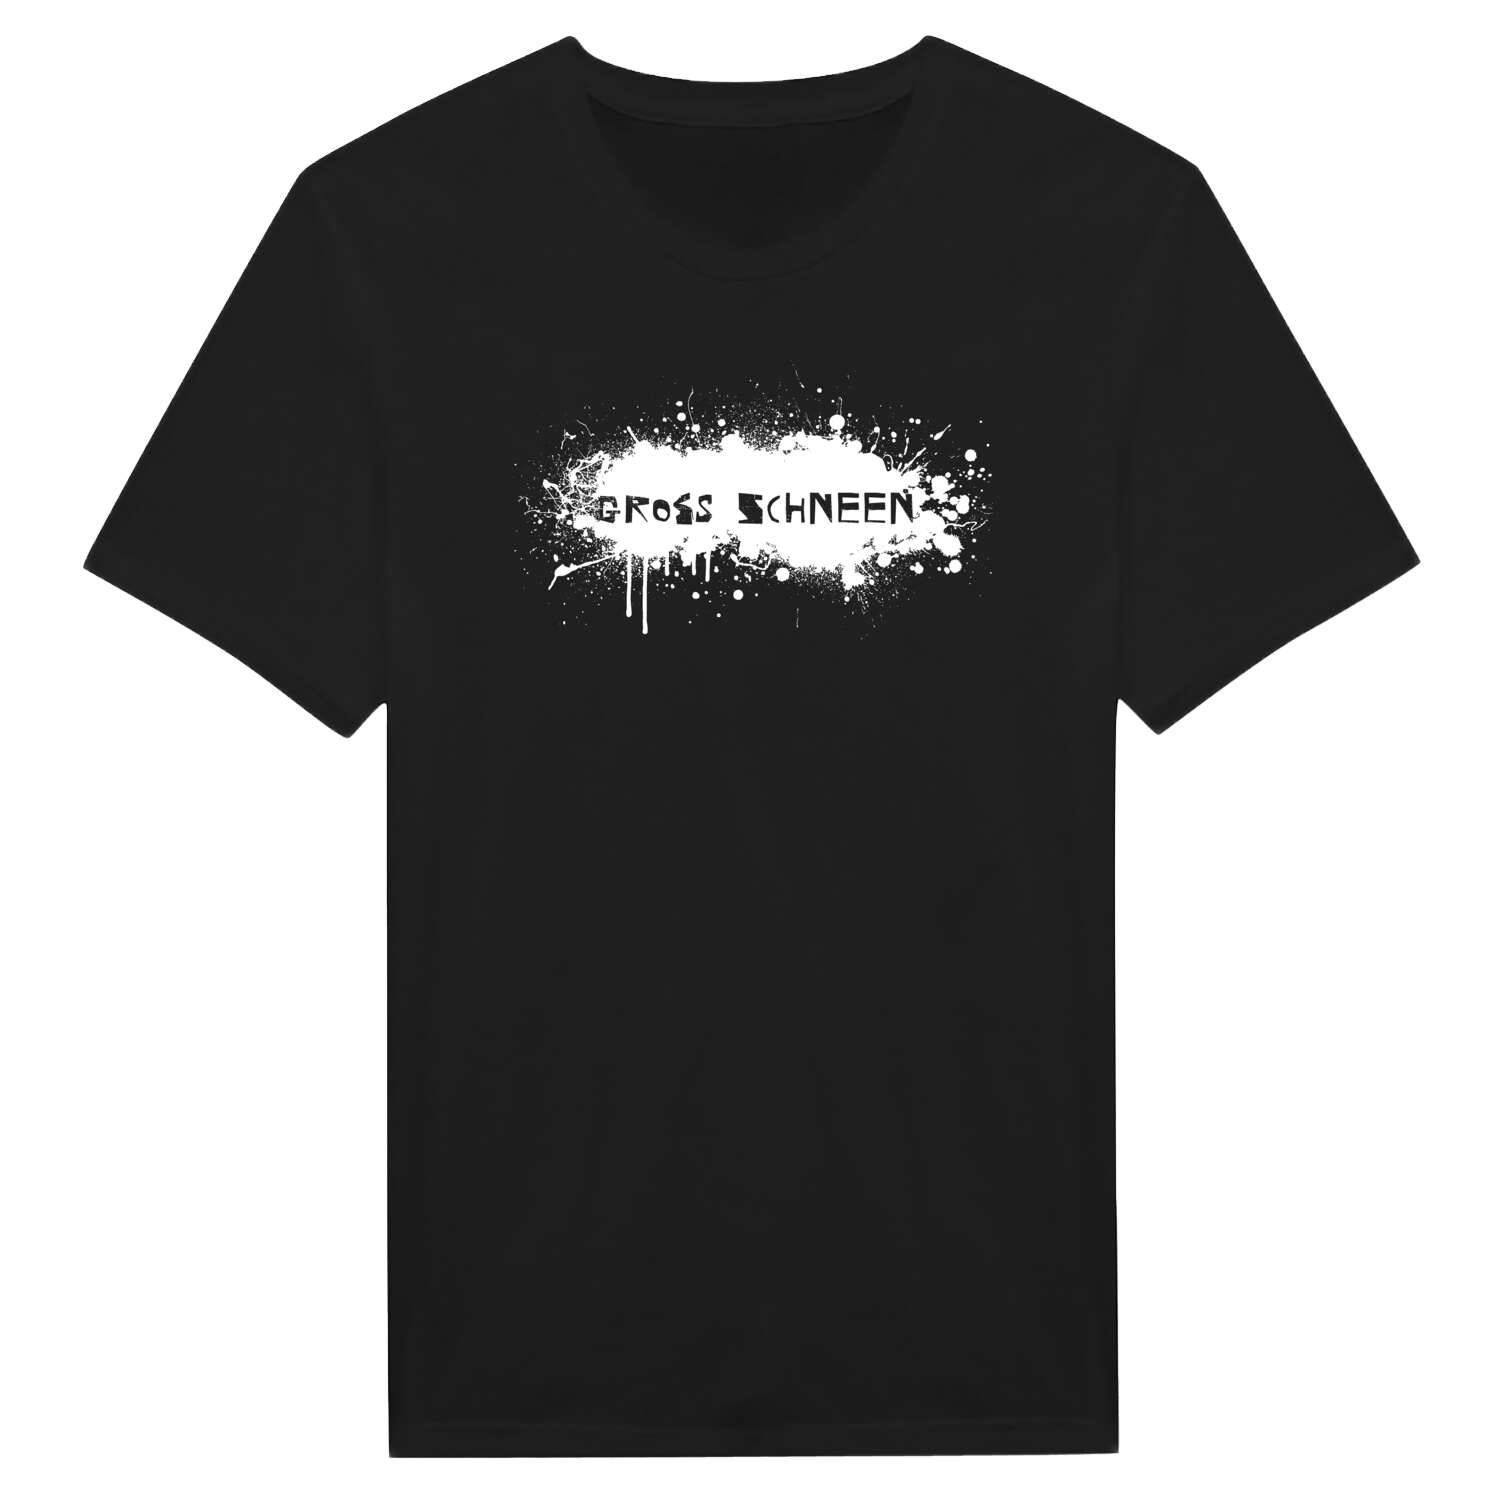 Groß Schneen T-Shirt »Paint Splash Punk«